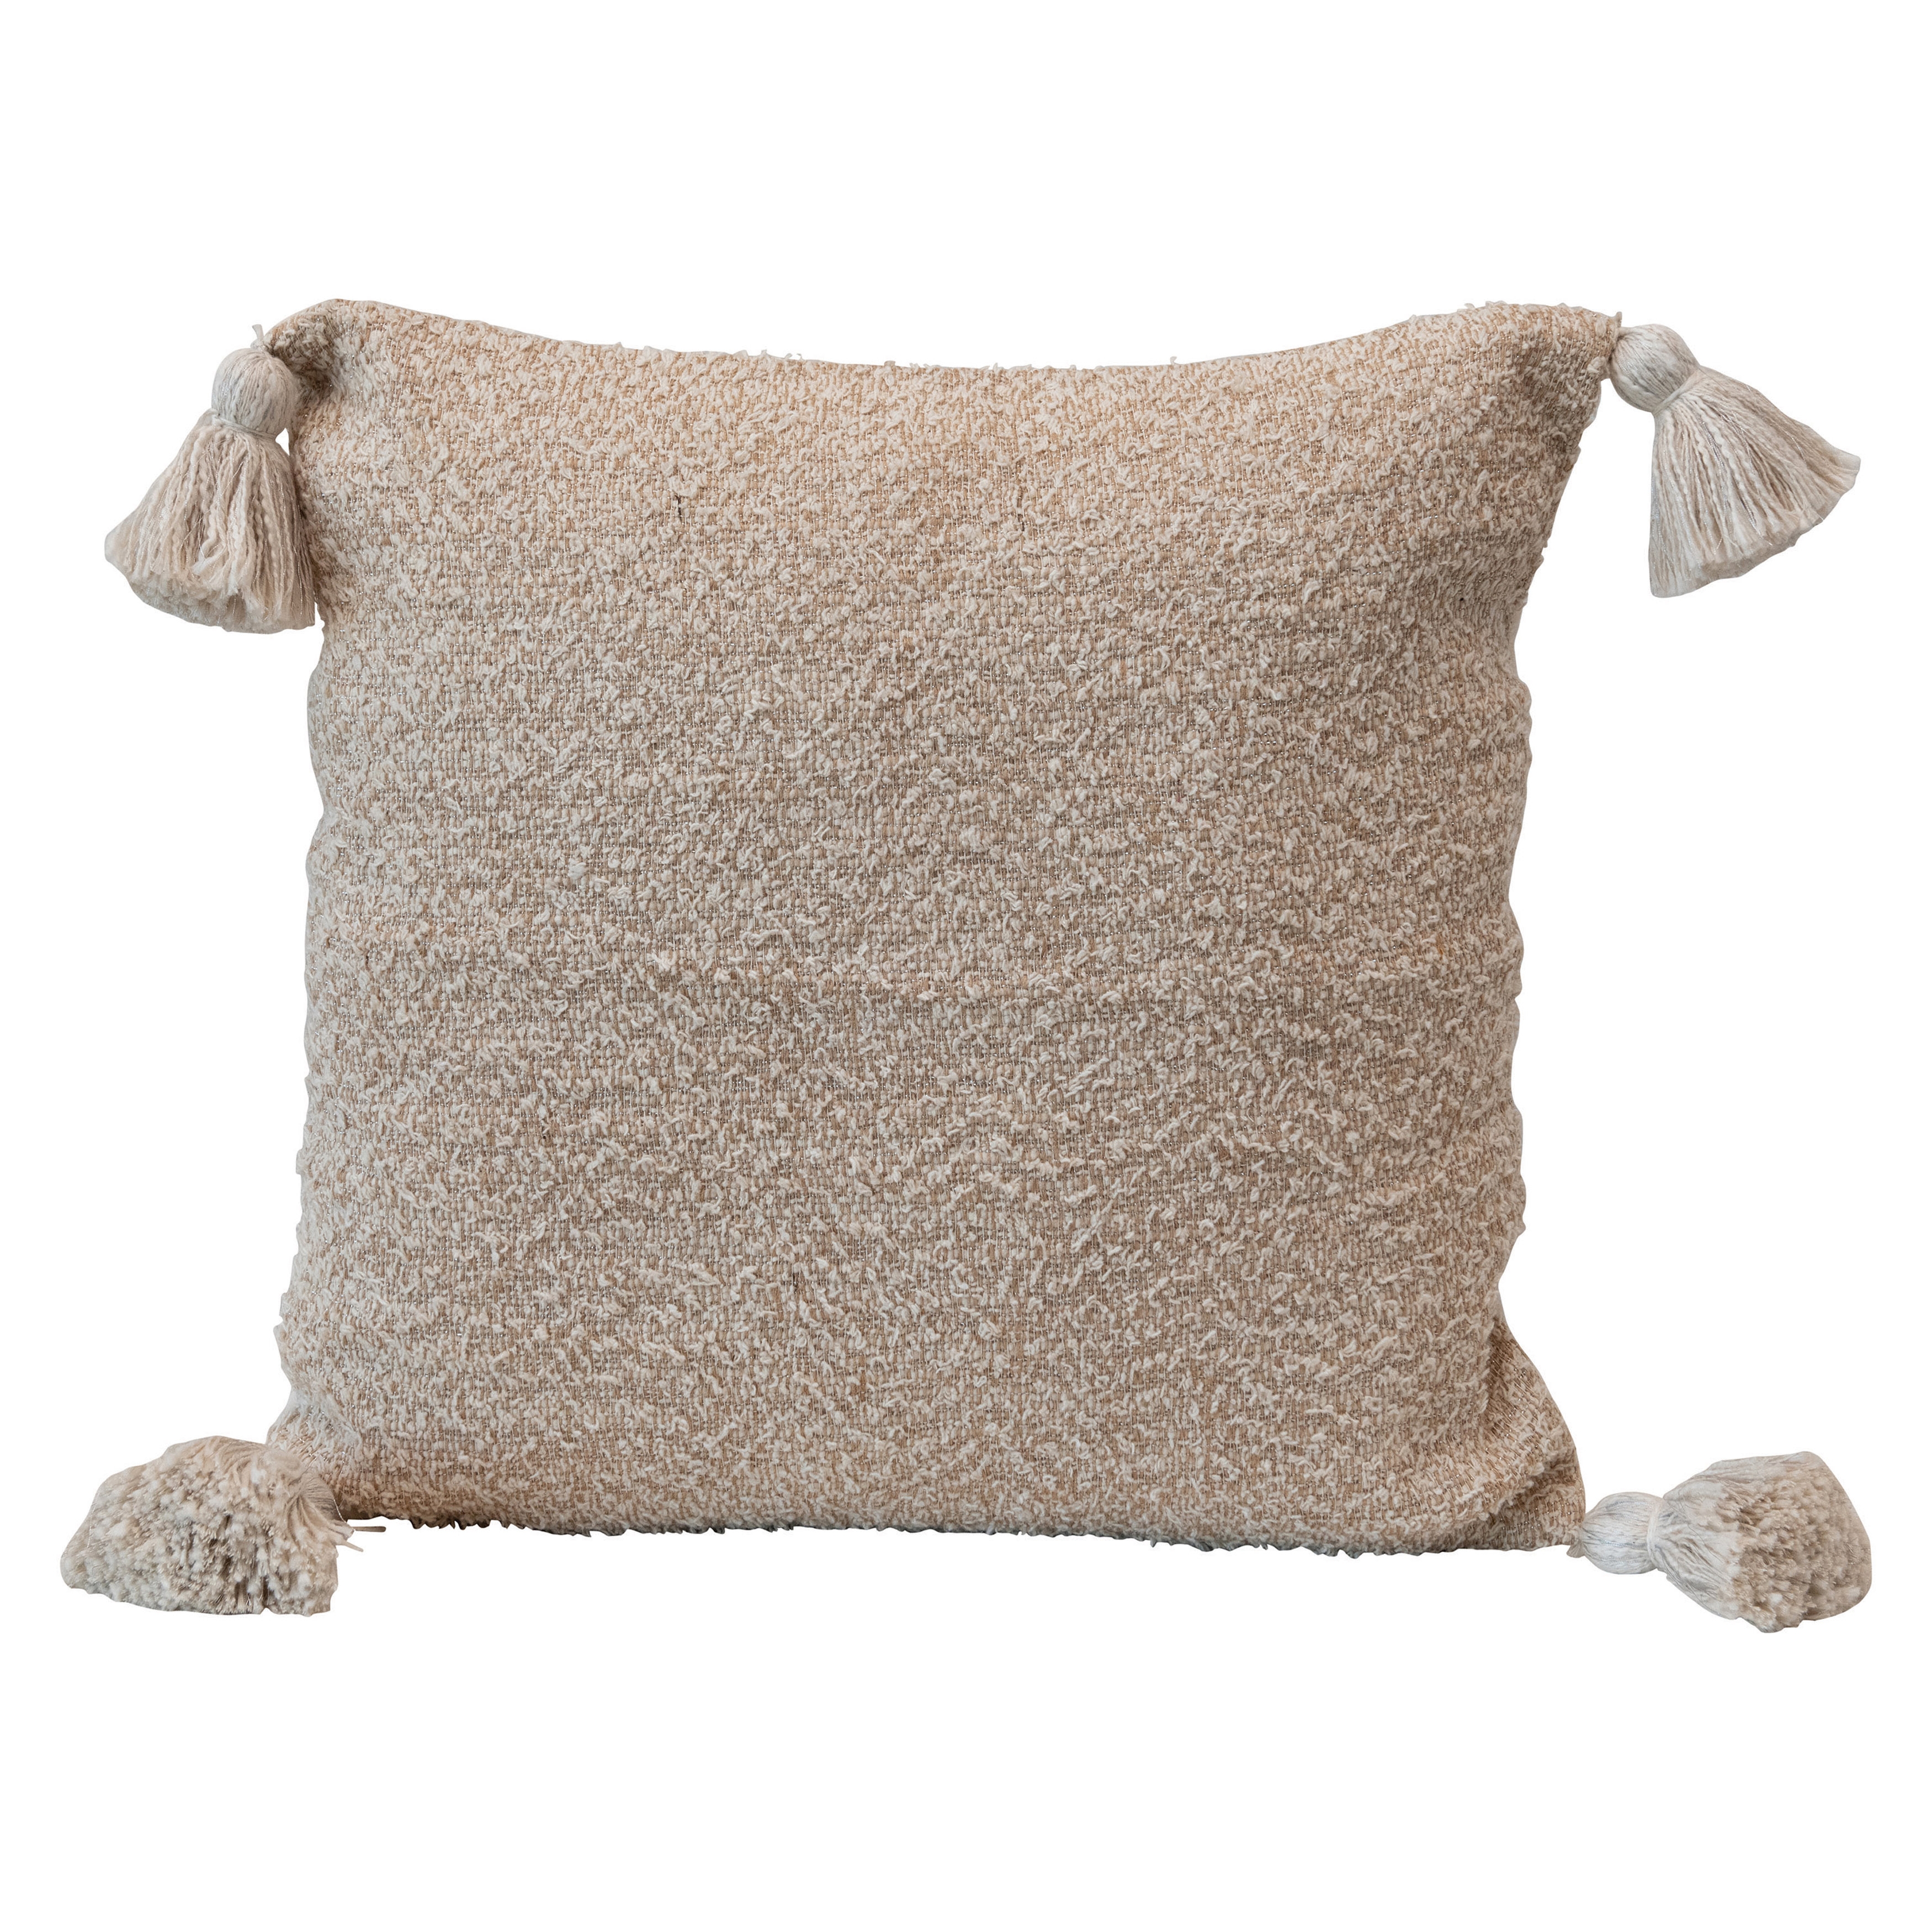 Woven Cotton Blend Lumbar Pillow with Metallic Thread & Tassels, Cream & Tan, 20" x 20" - Image 0